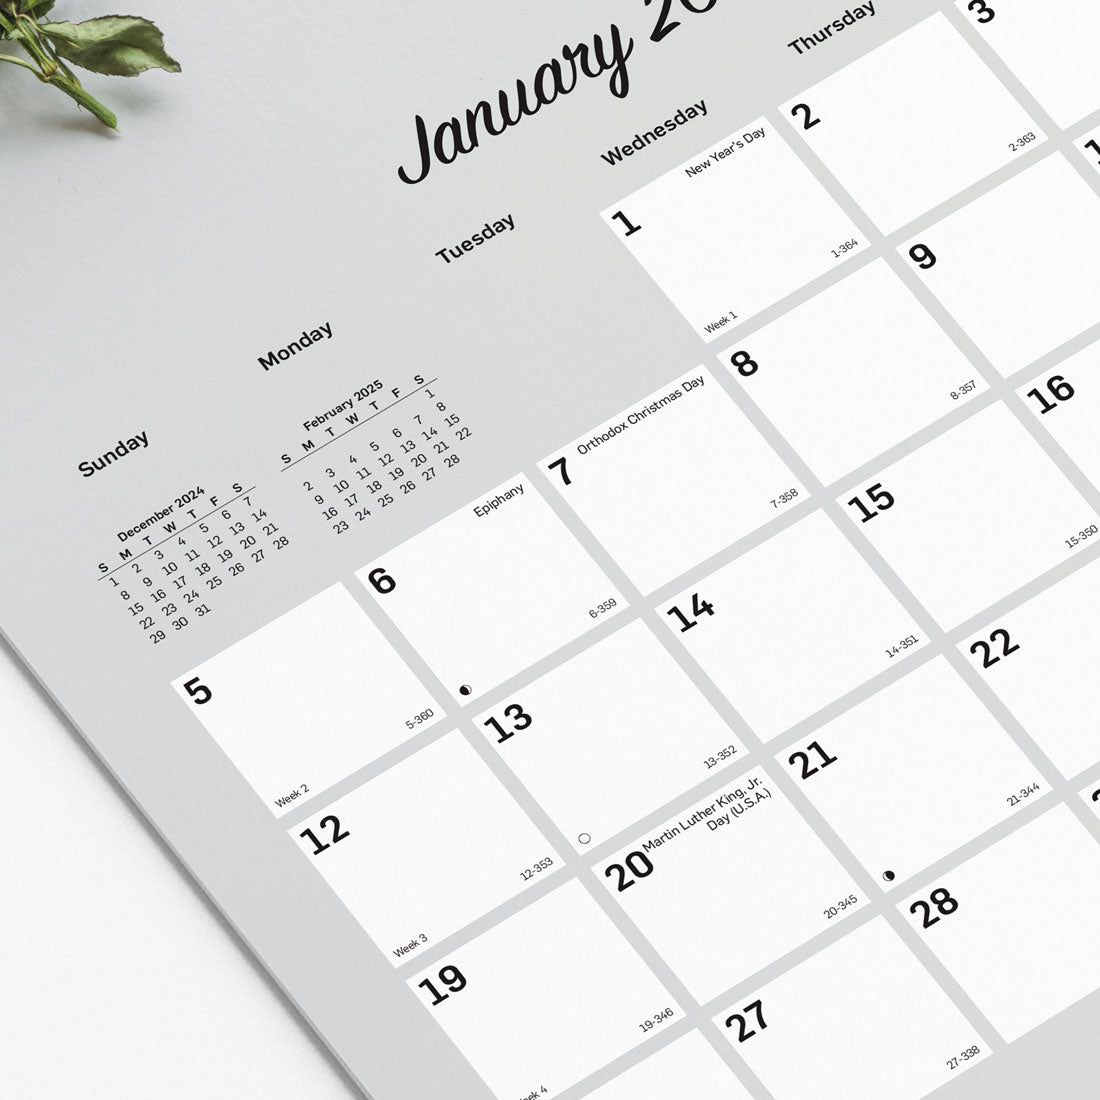 Romantic Monthly Wall Calendar 2025 C173122